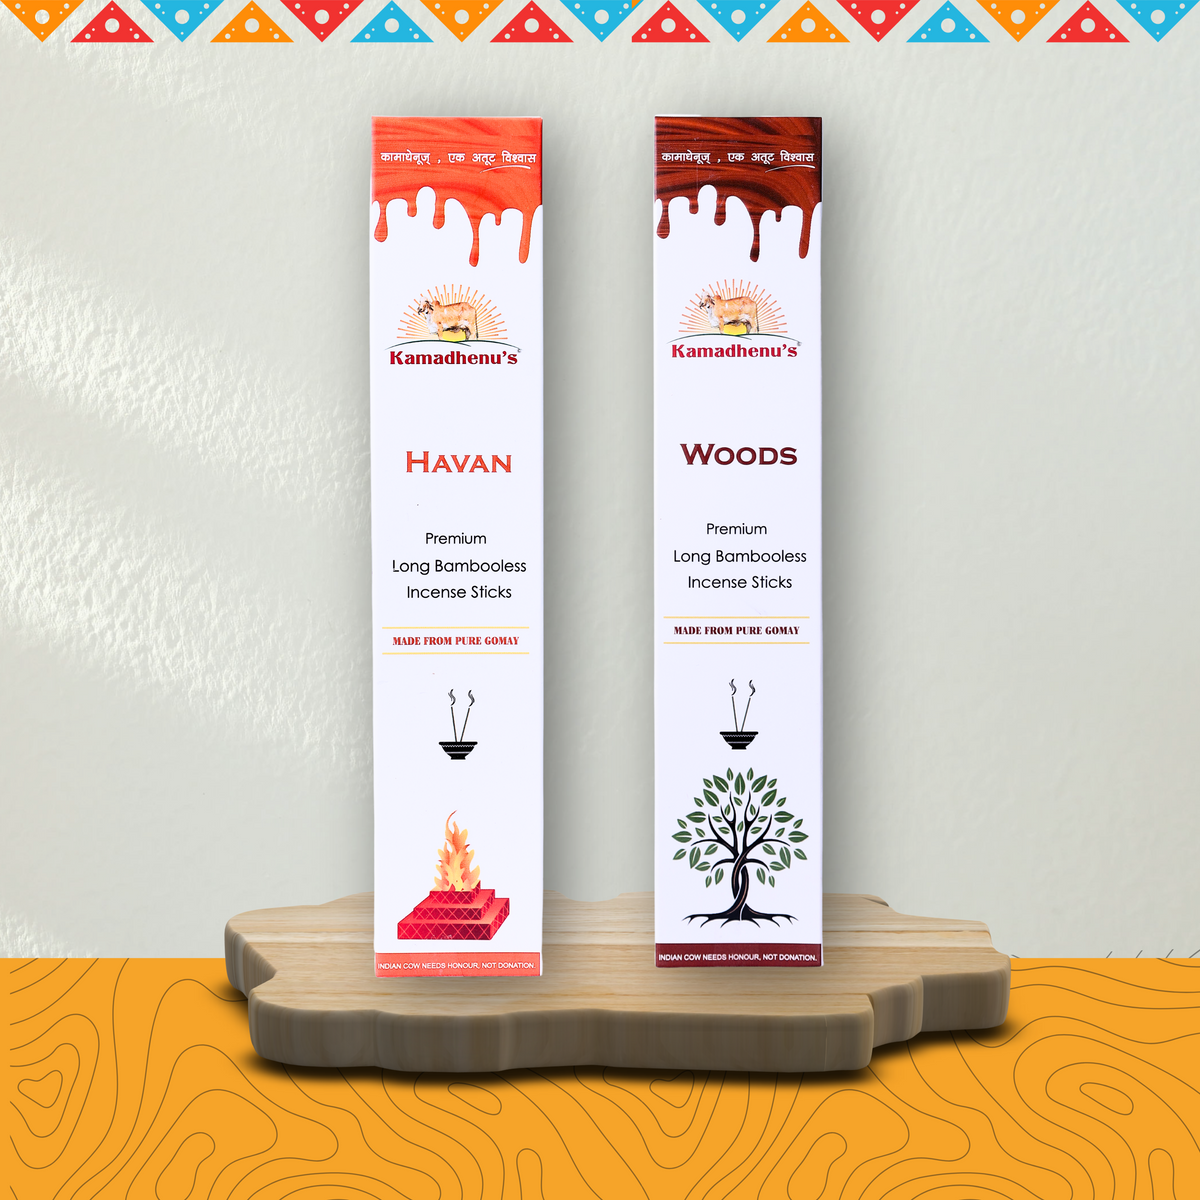 Kamadhenu's Premium Long Bambooless Incense Sticks Combo (Woods And Havan)